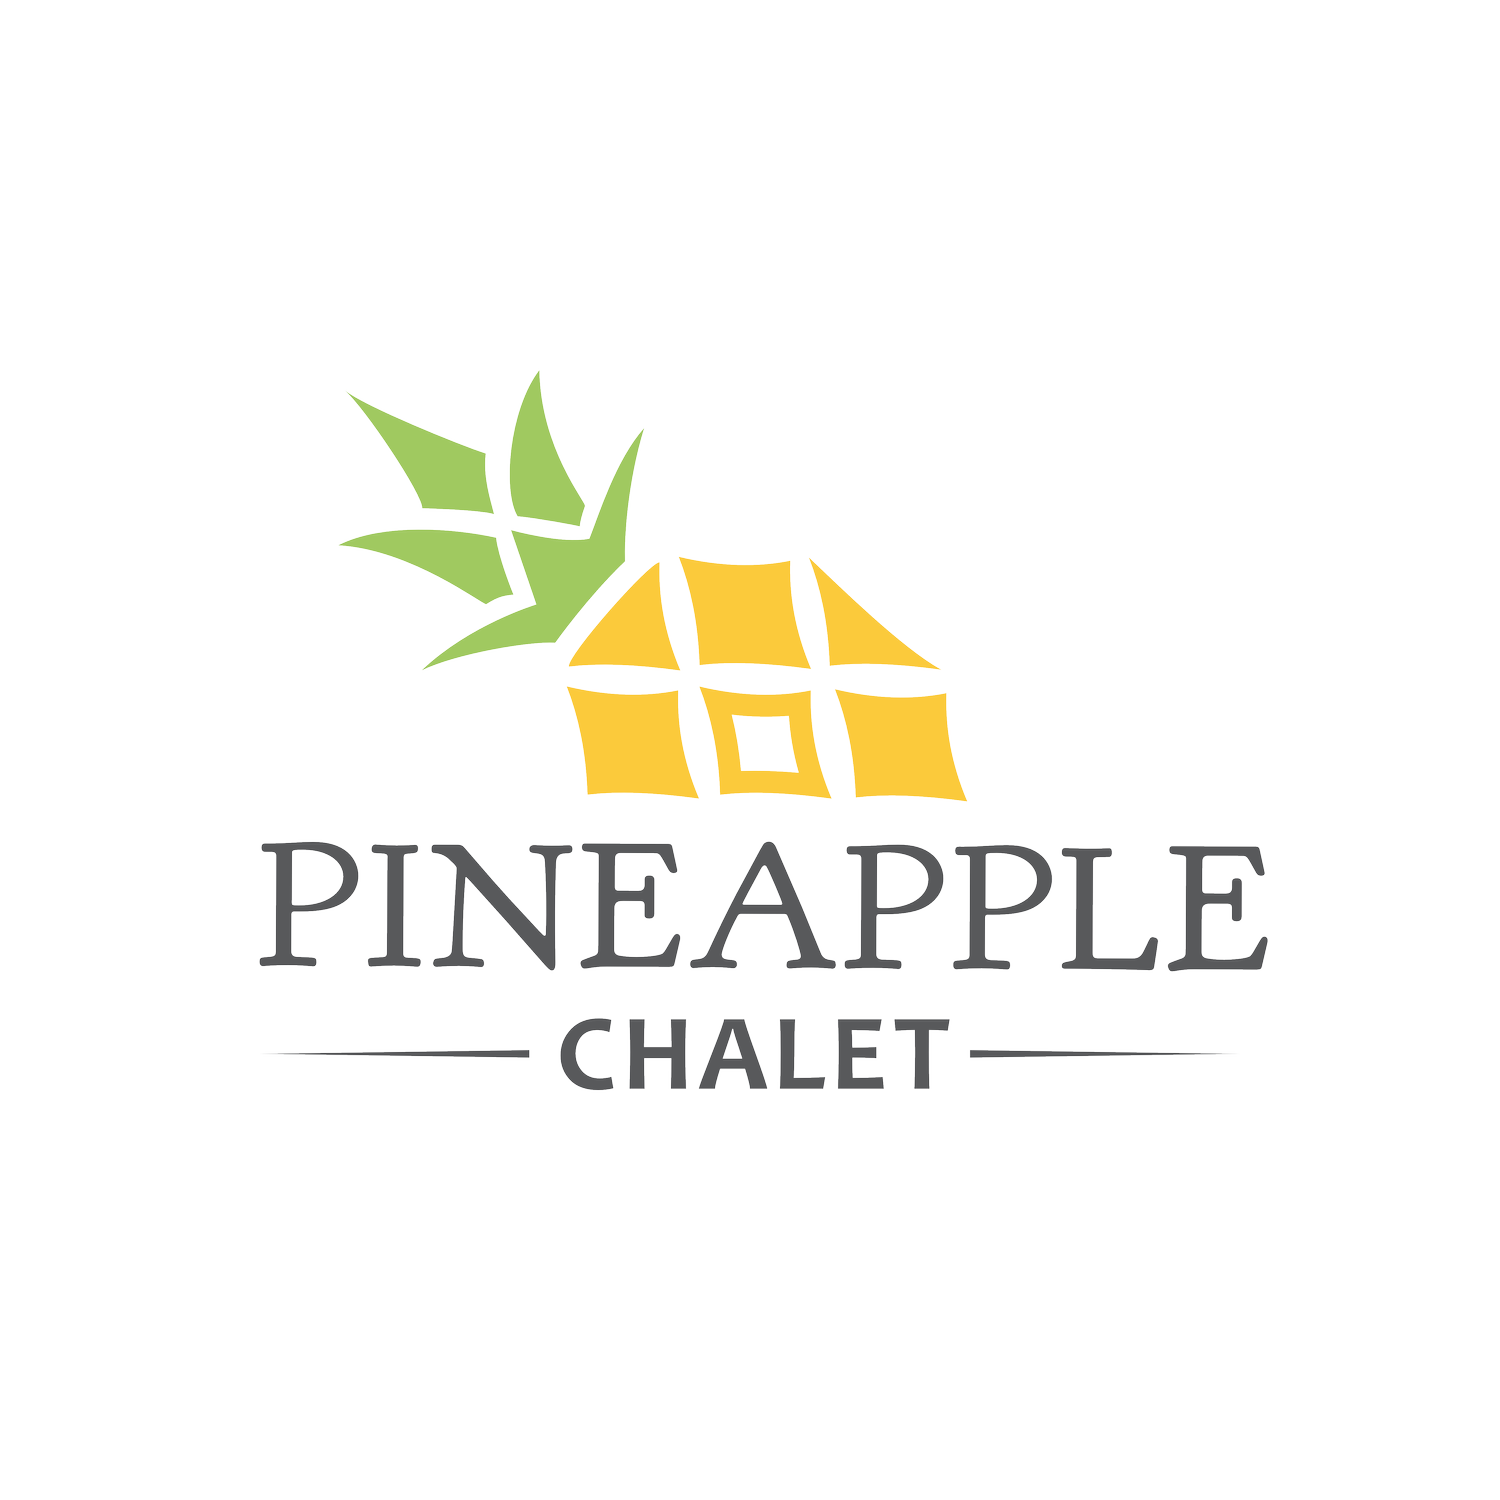 Pineapple Chalet